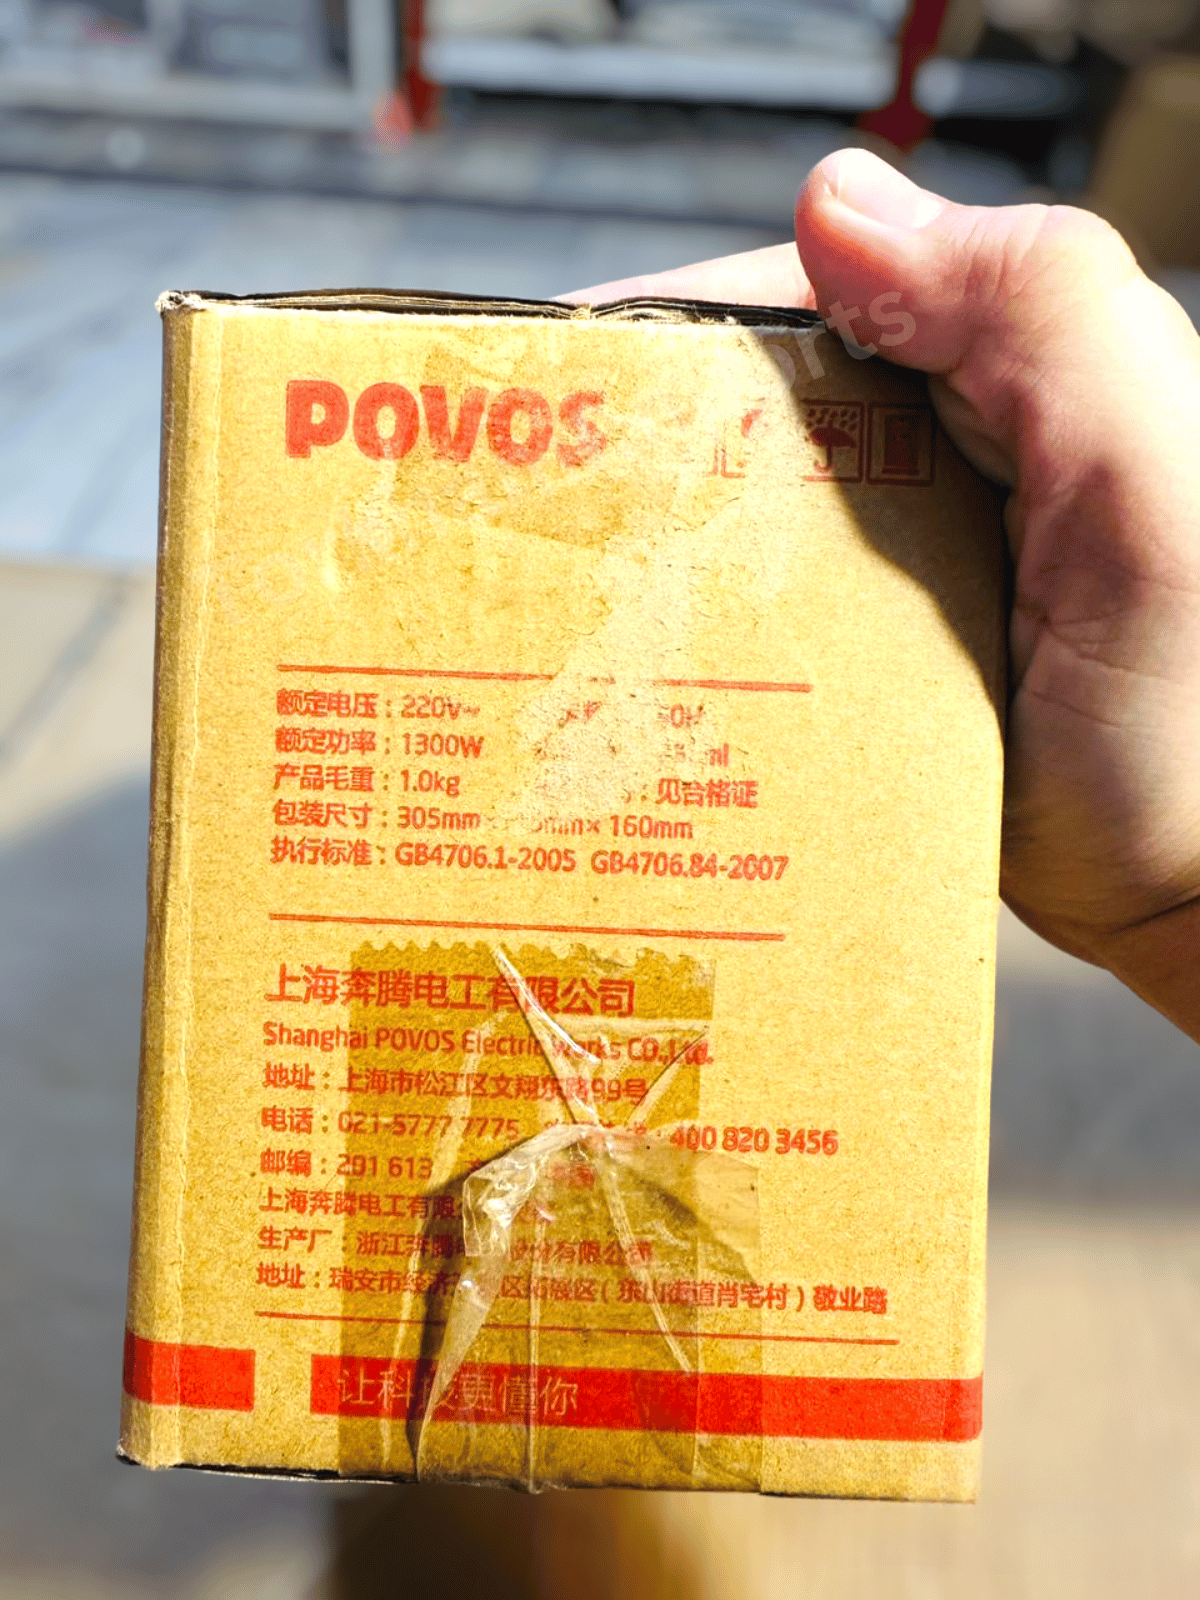 Povos 1300W handheld Garment Steamer